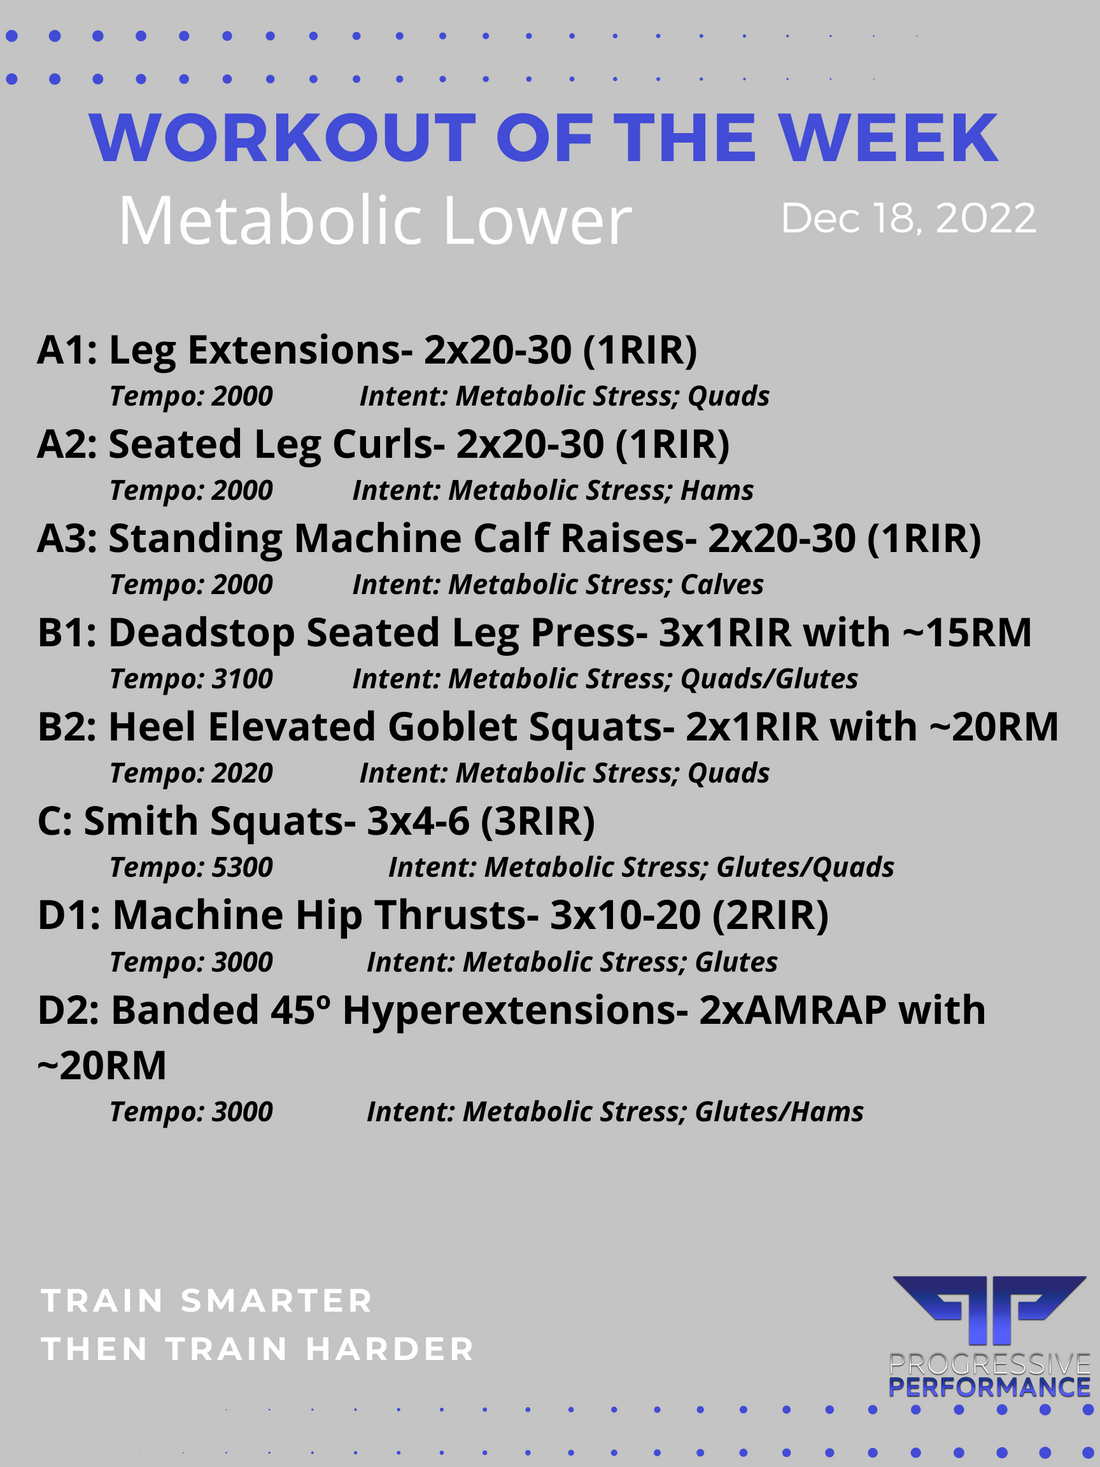 Metabolic Lower